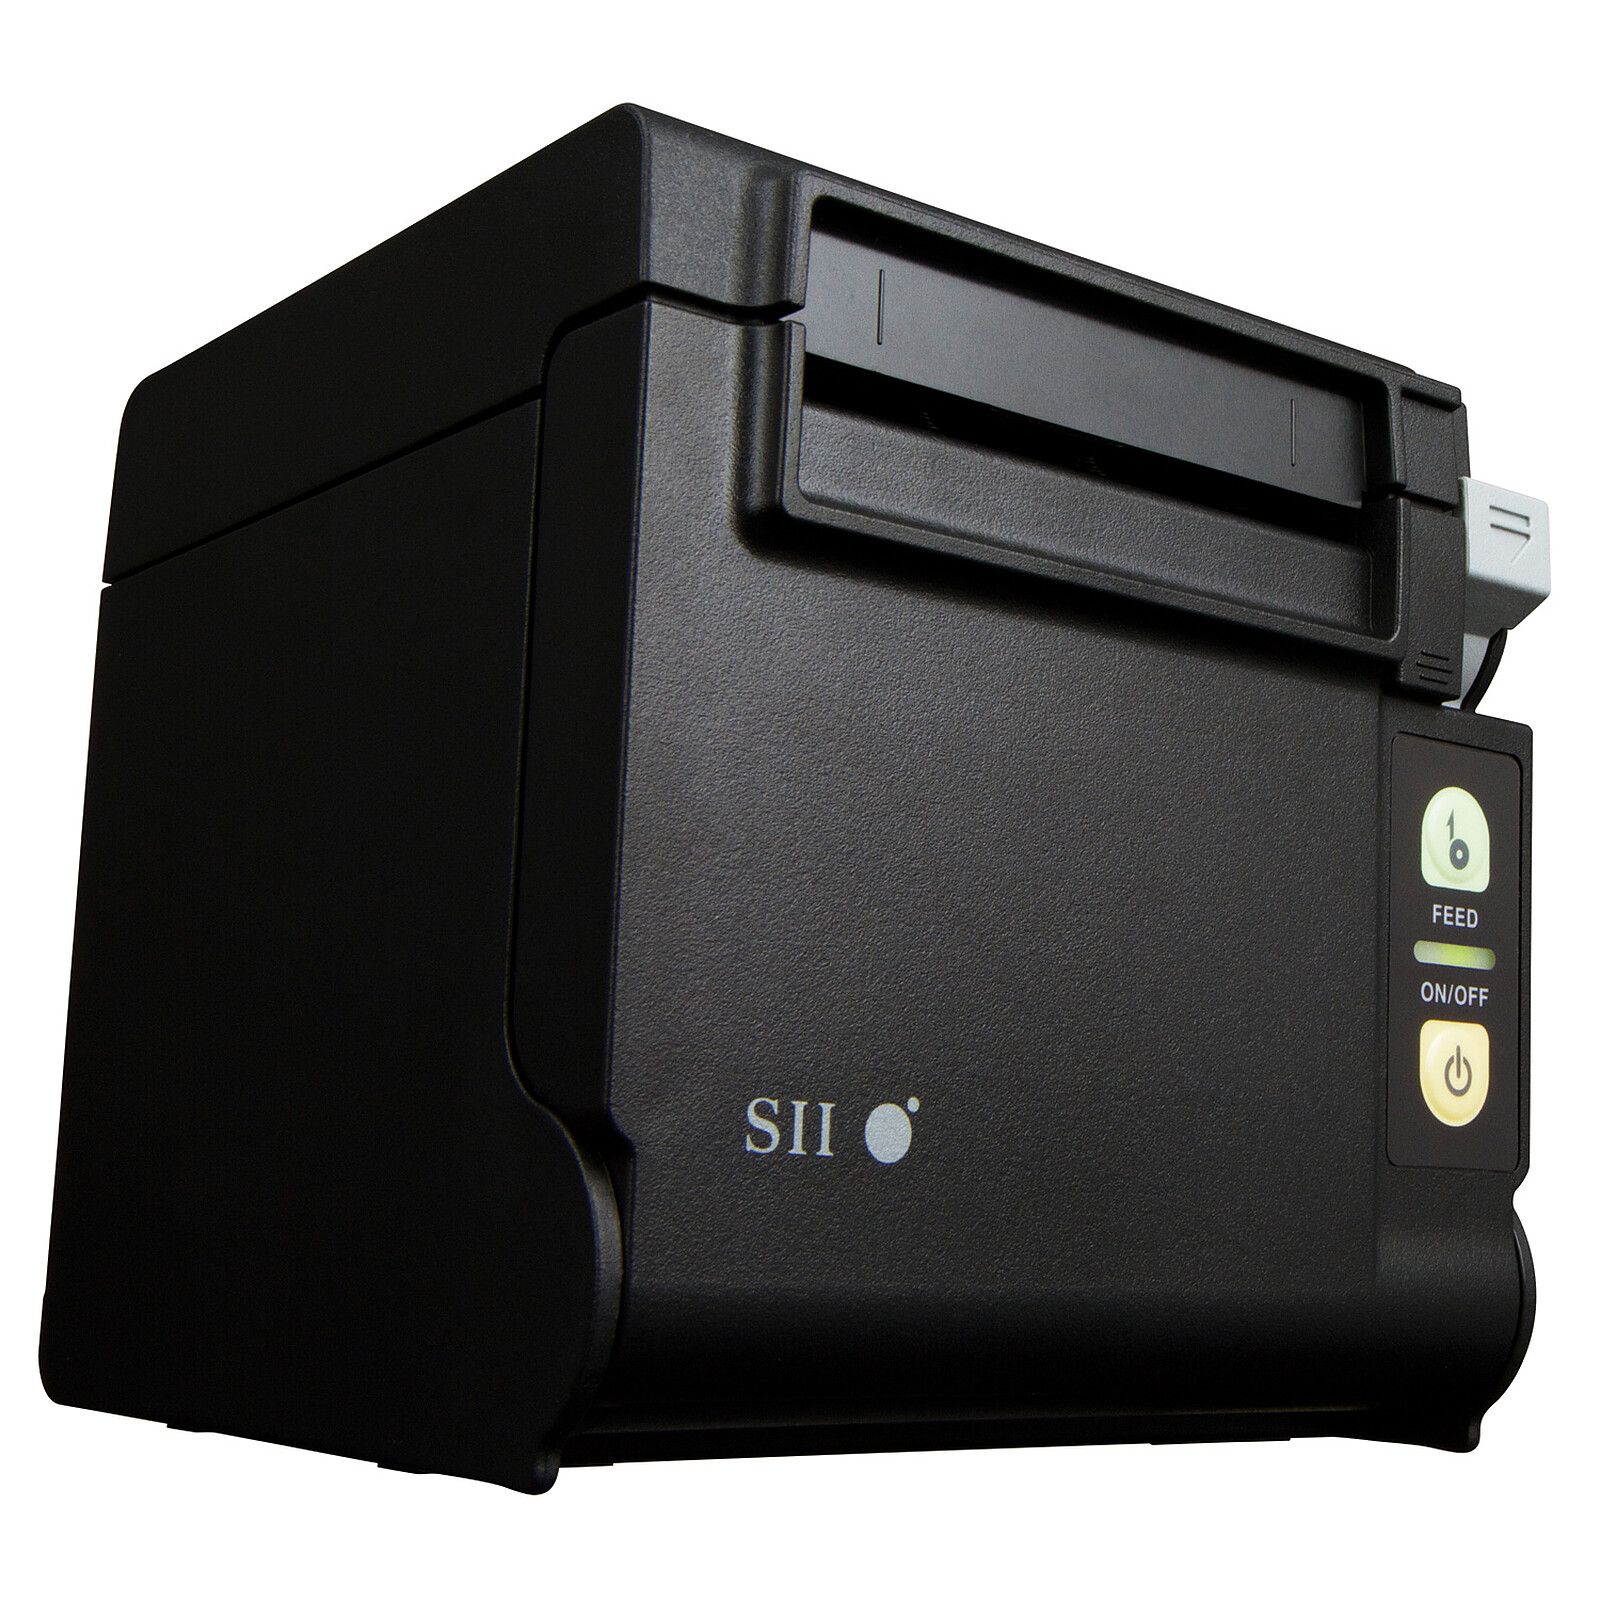 Seiko RP-D10 (Ethernet) Black (RP-D10-K27J1-E) - Thermal printer 